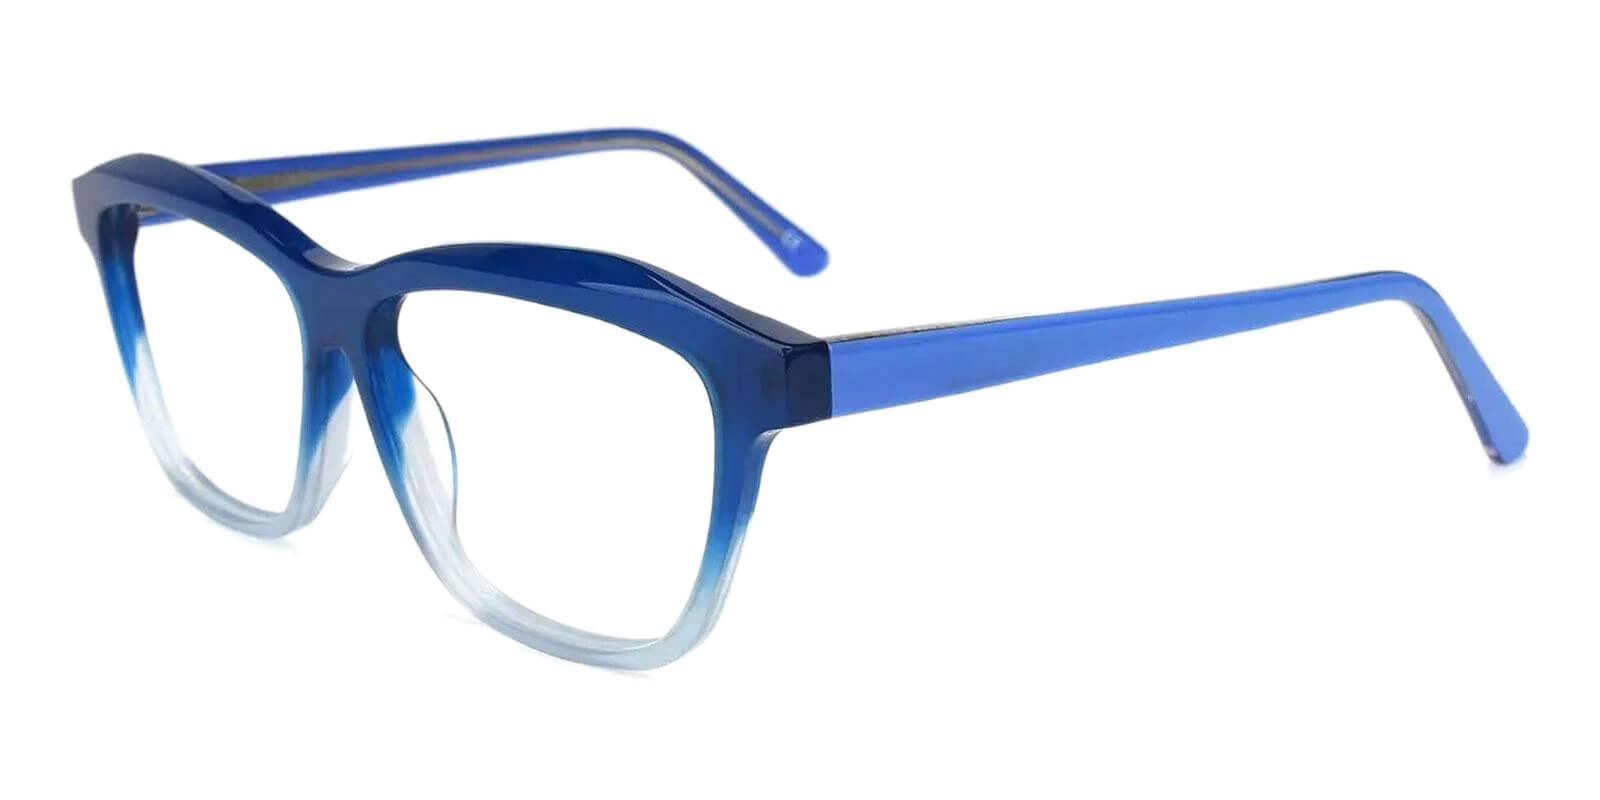 Sonia Blue Acetate Eyeglasses , SpringHinges , UniversalBridgeFit Frames from ABBE Glasses